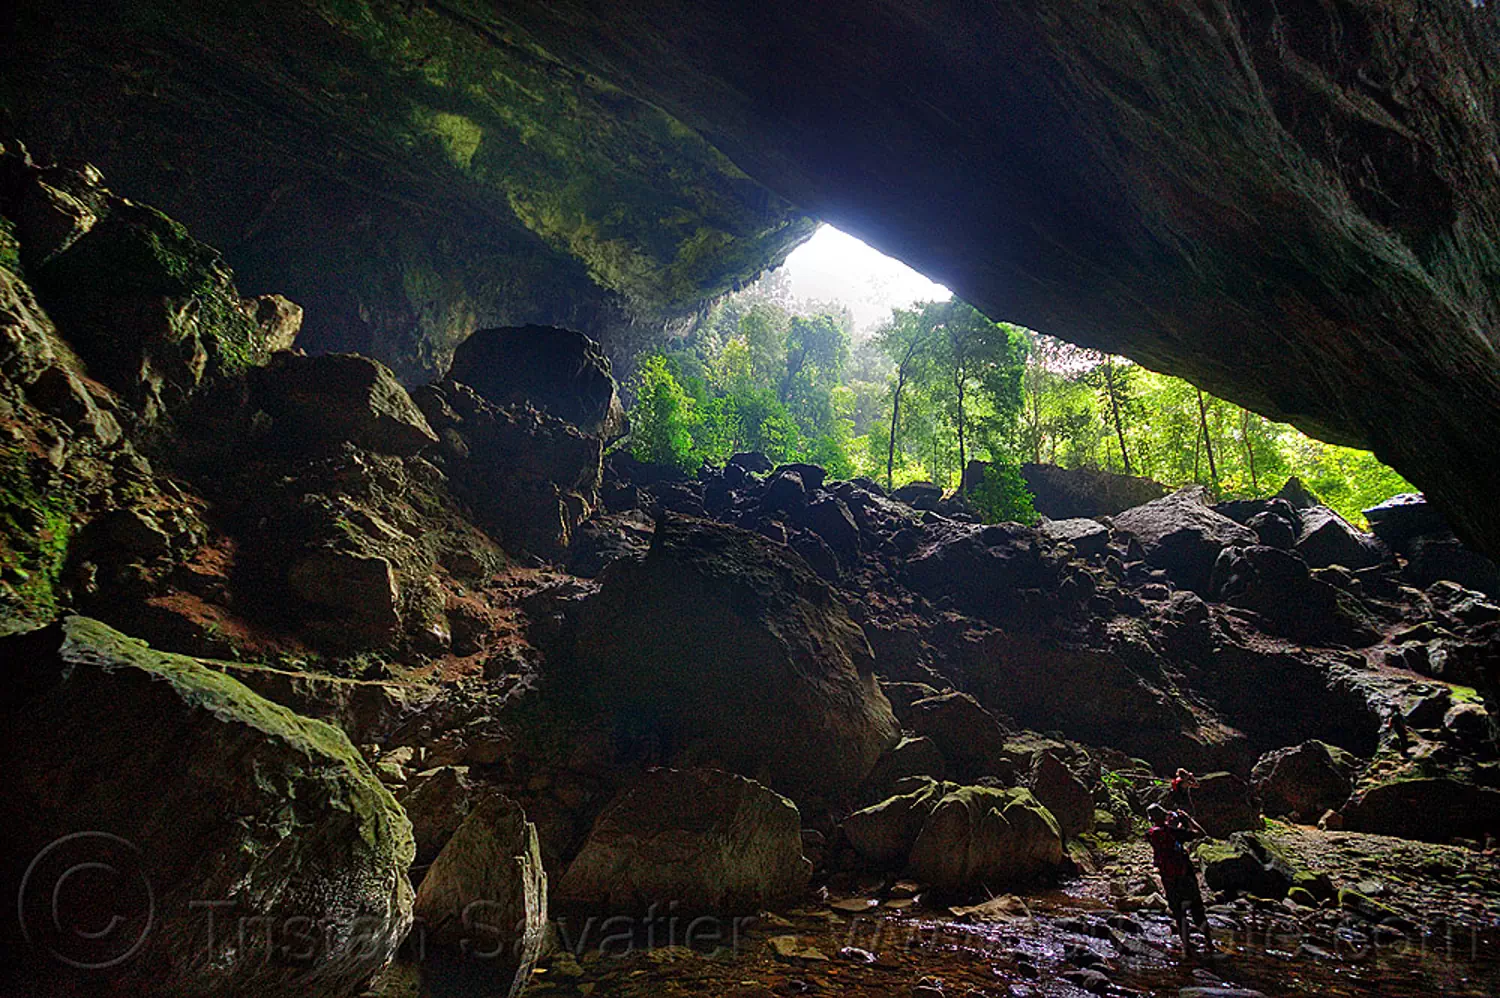 deer cave and garden of eden - mulu (borneo), backlight, borneo, cave mouth, caving, deer cave, garden of eden, gunung mulu national park, jungle, malaysia, natural cave, rain forest, spelunking, trees